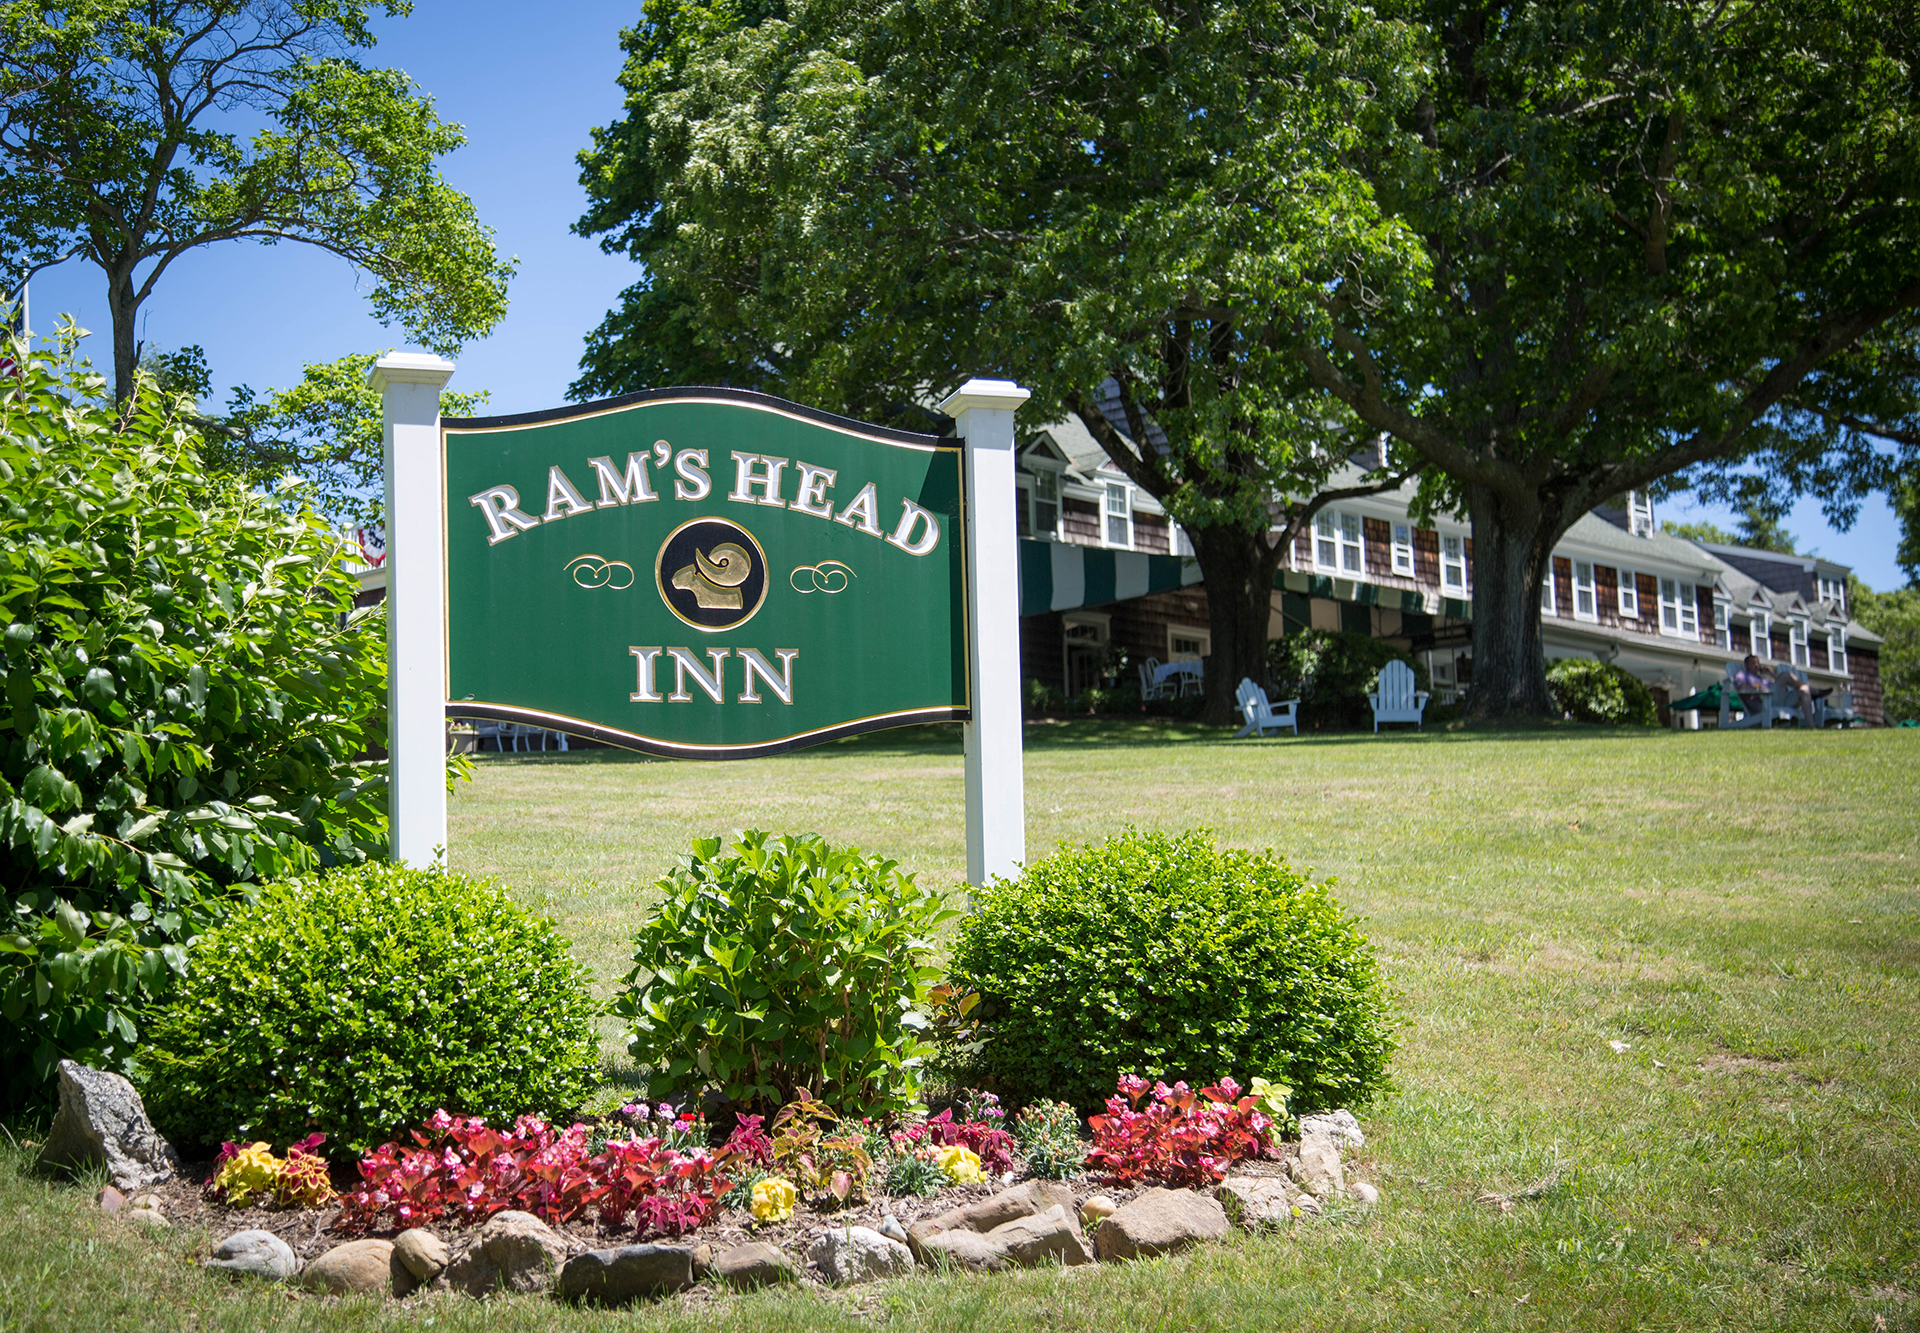 Ram's Head Inn on Shelter Island